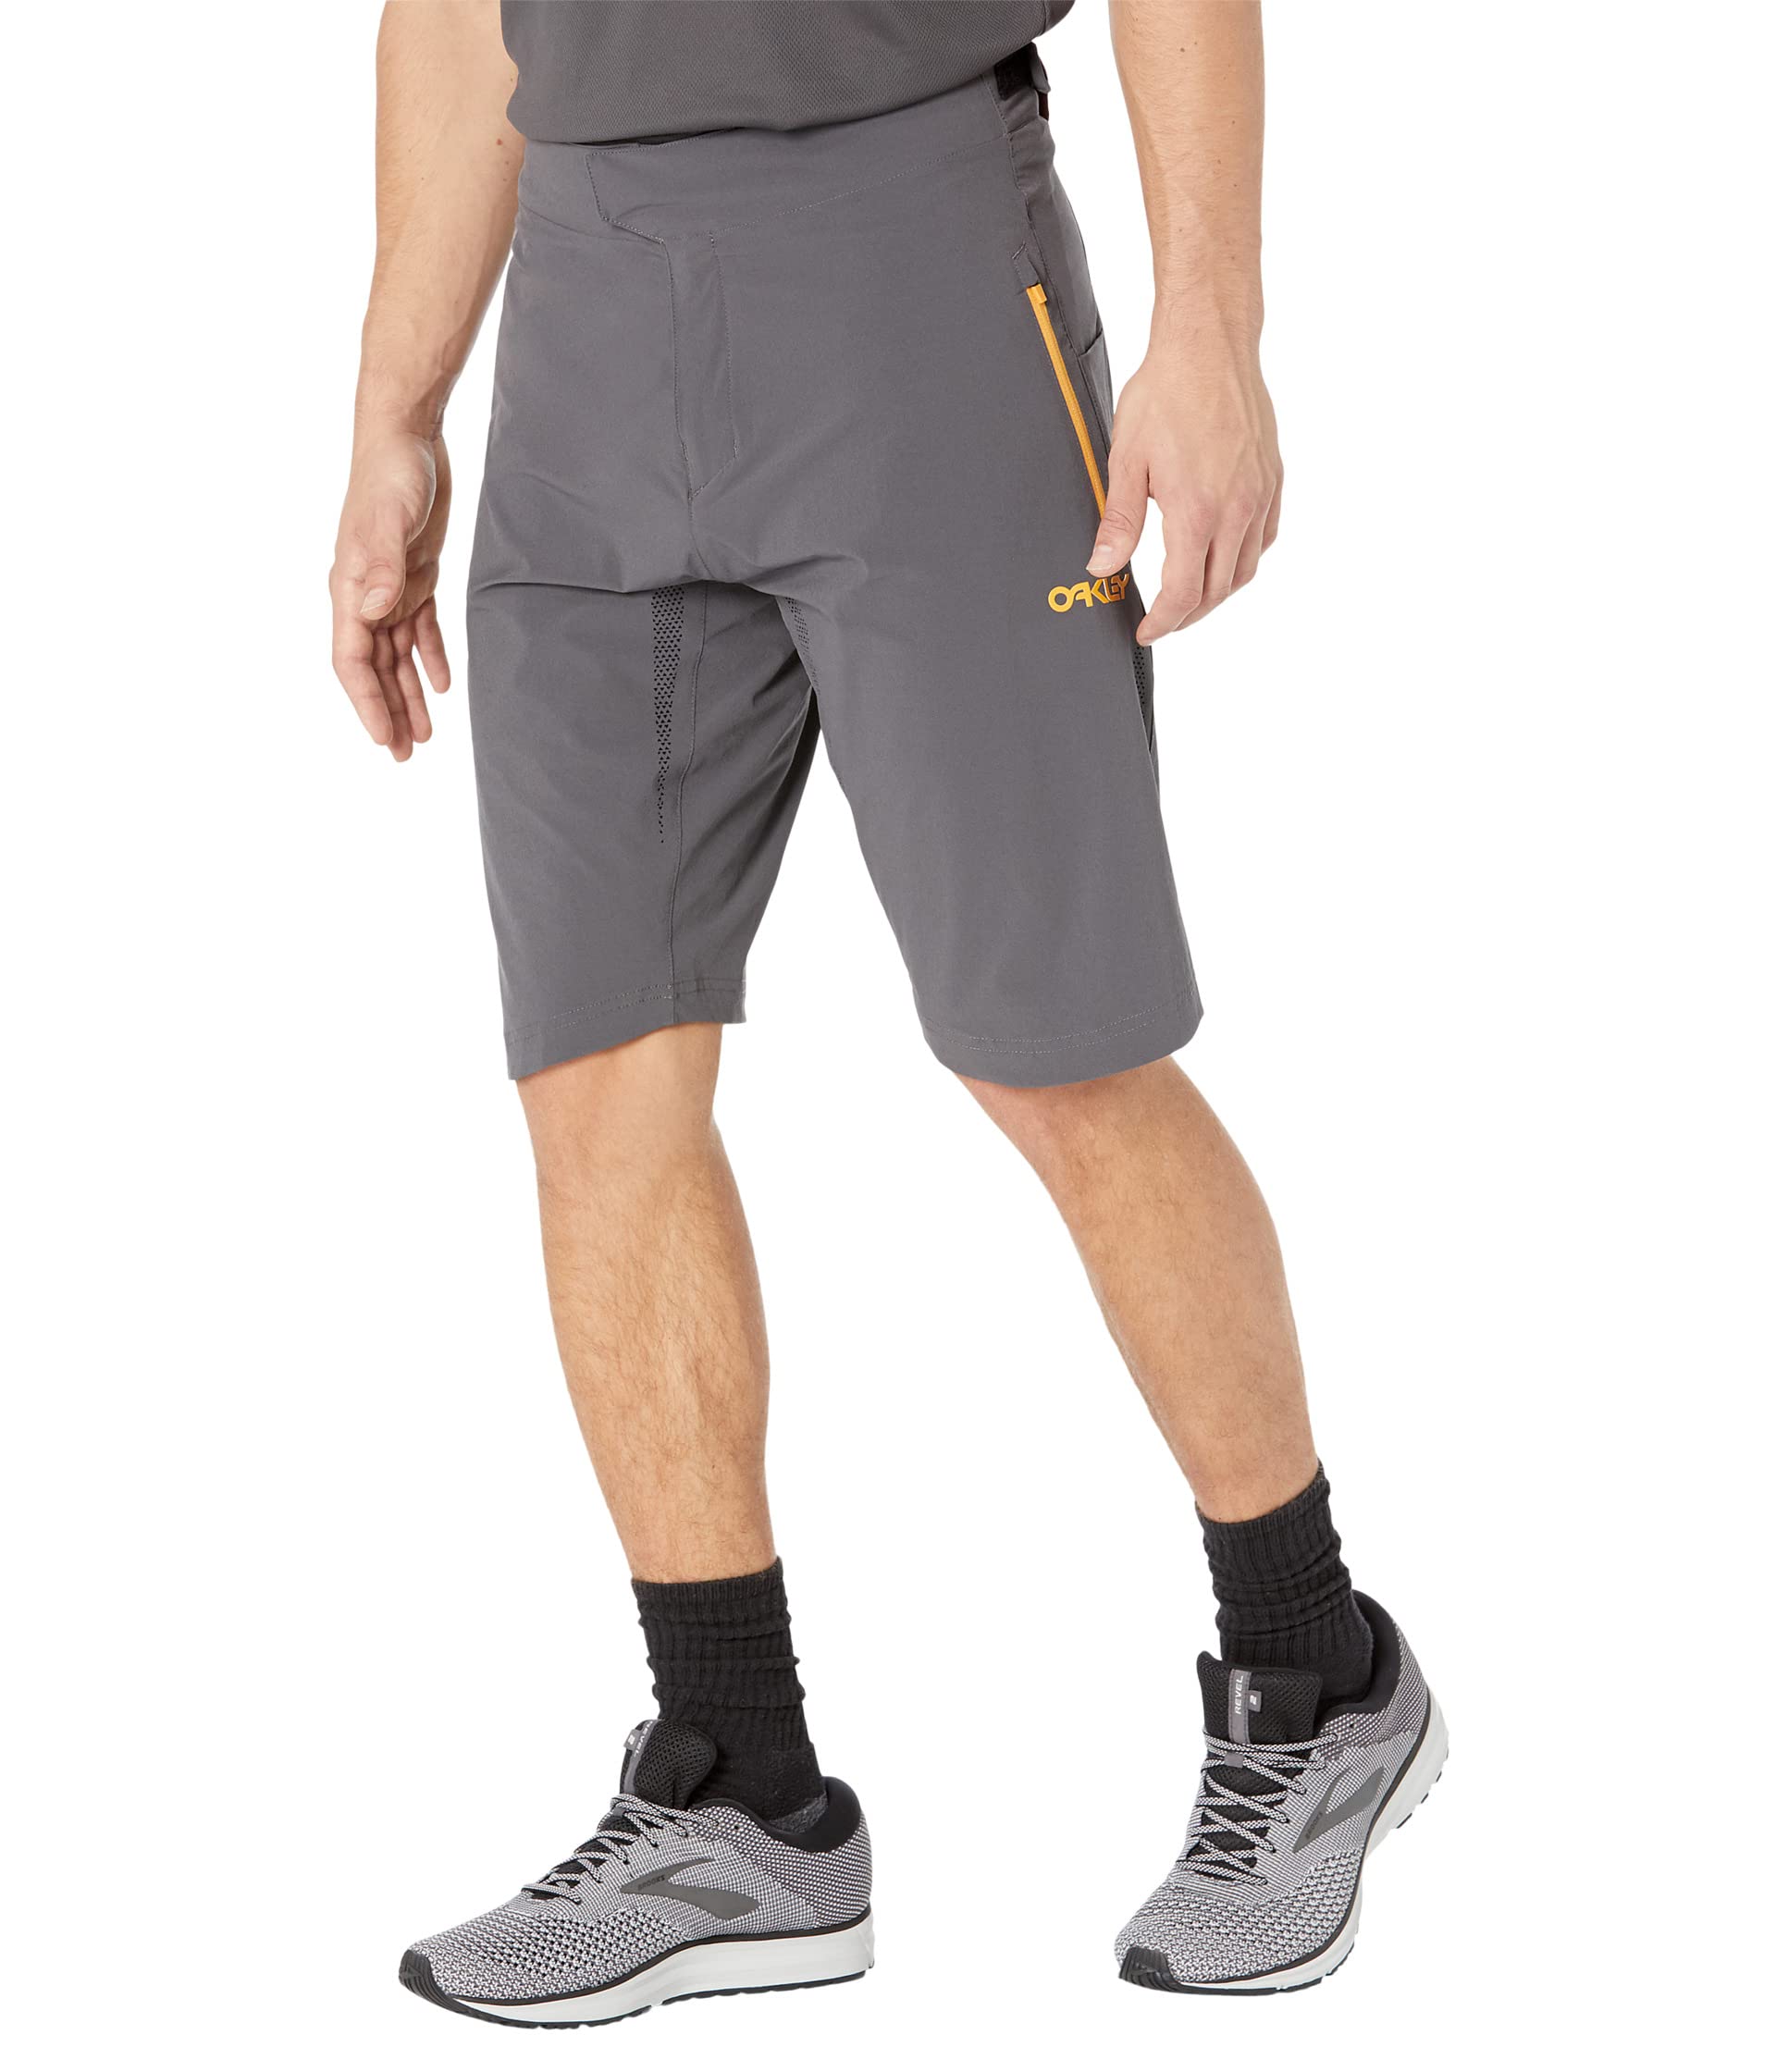 Шорты Oakley, Reduct Berm MTB Shorts брюки sdsinan solid цвет forged iron